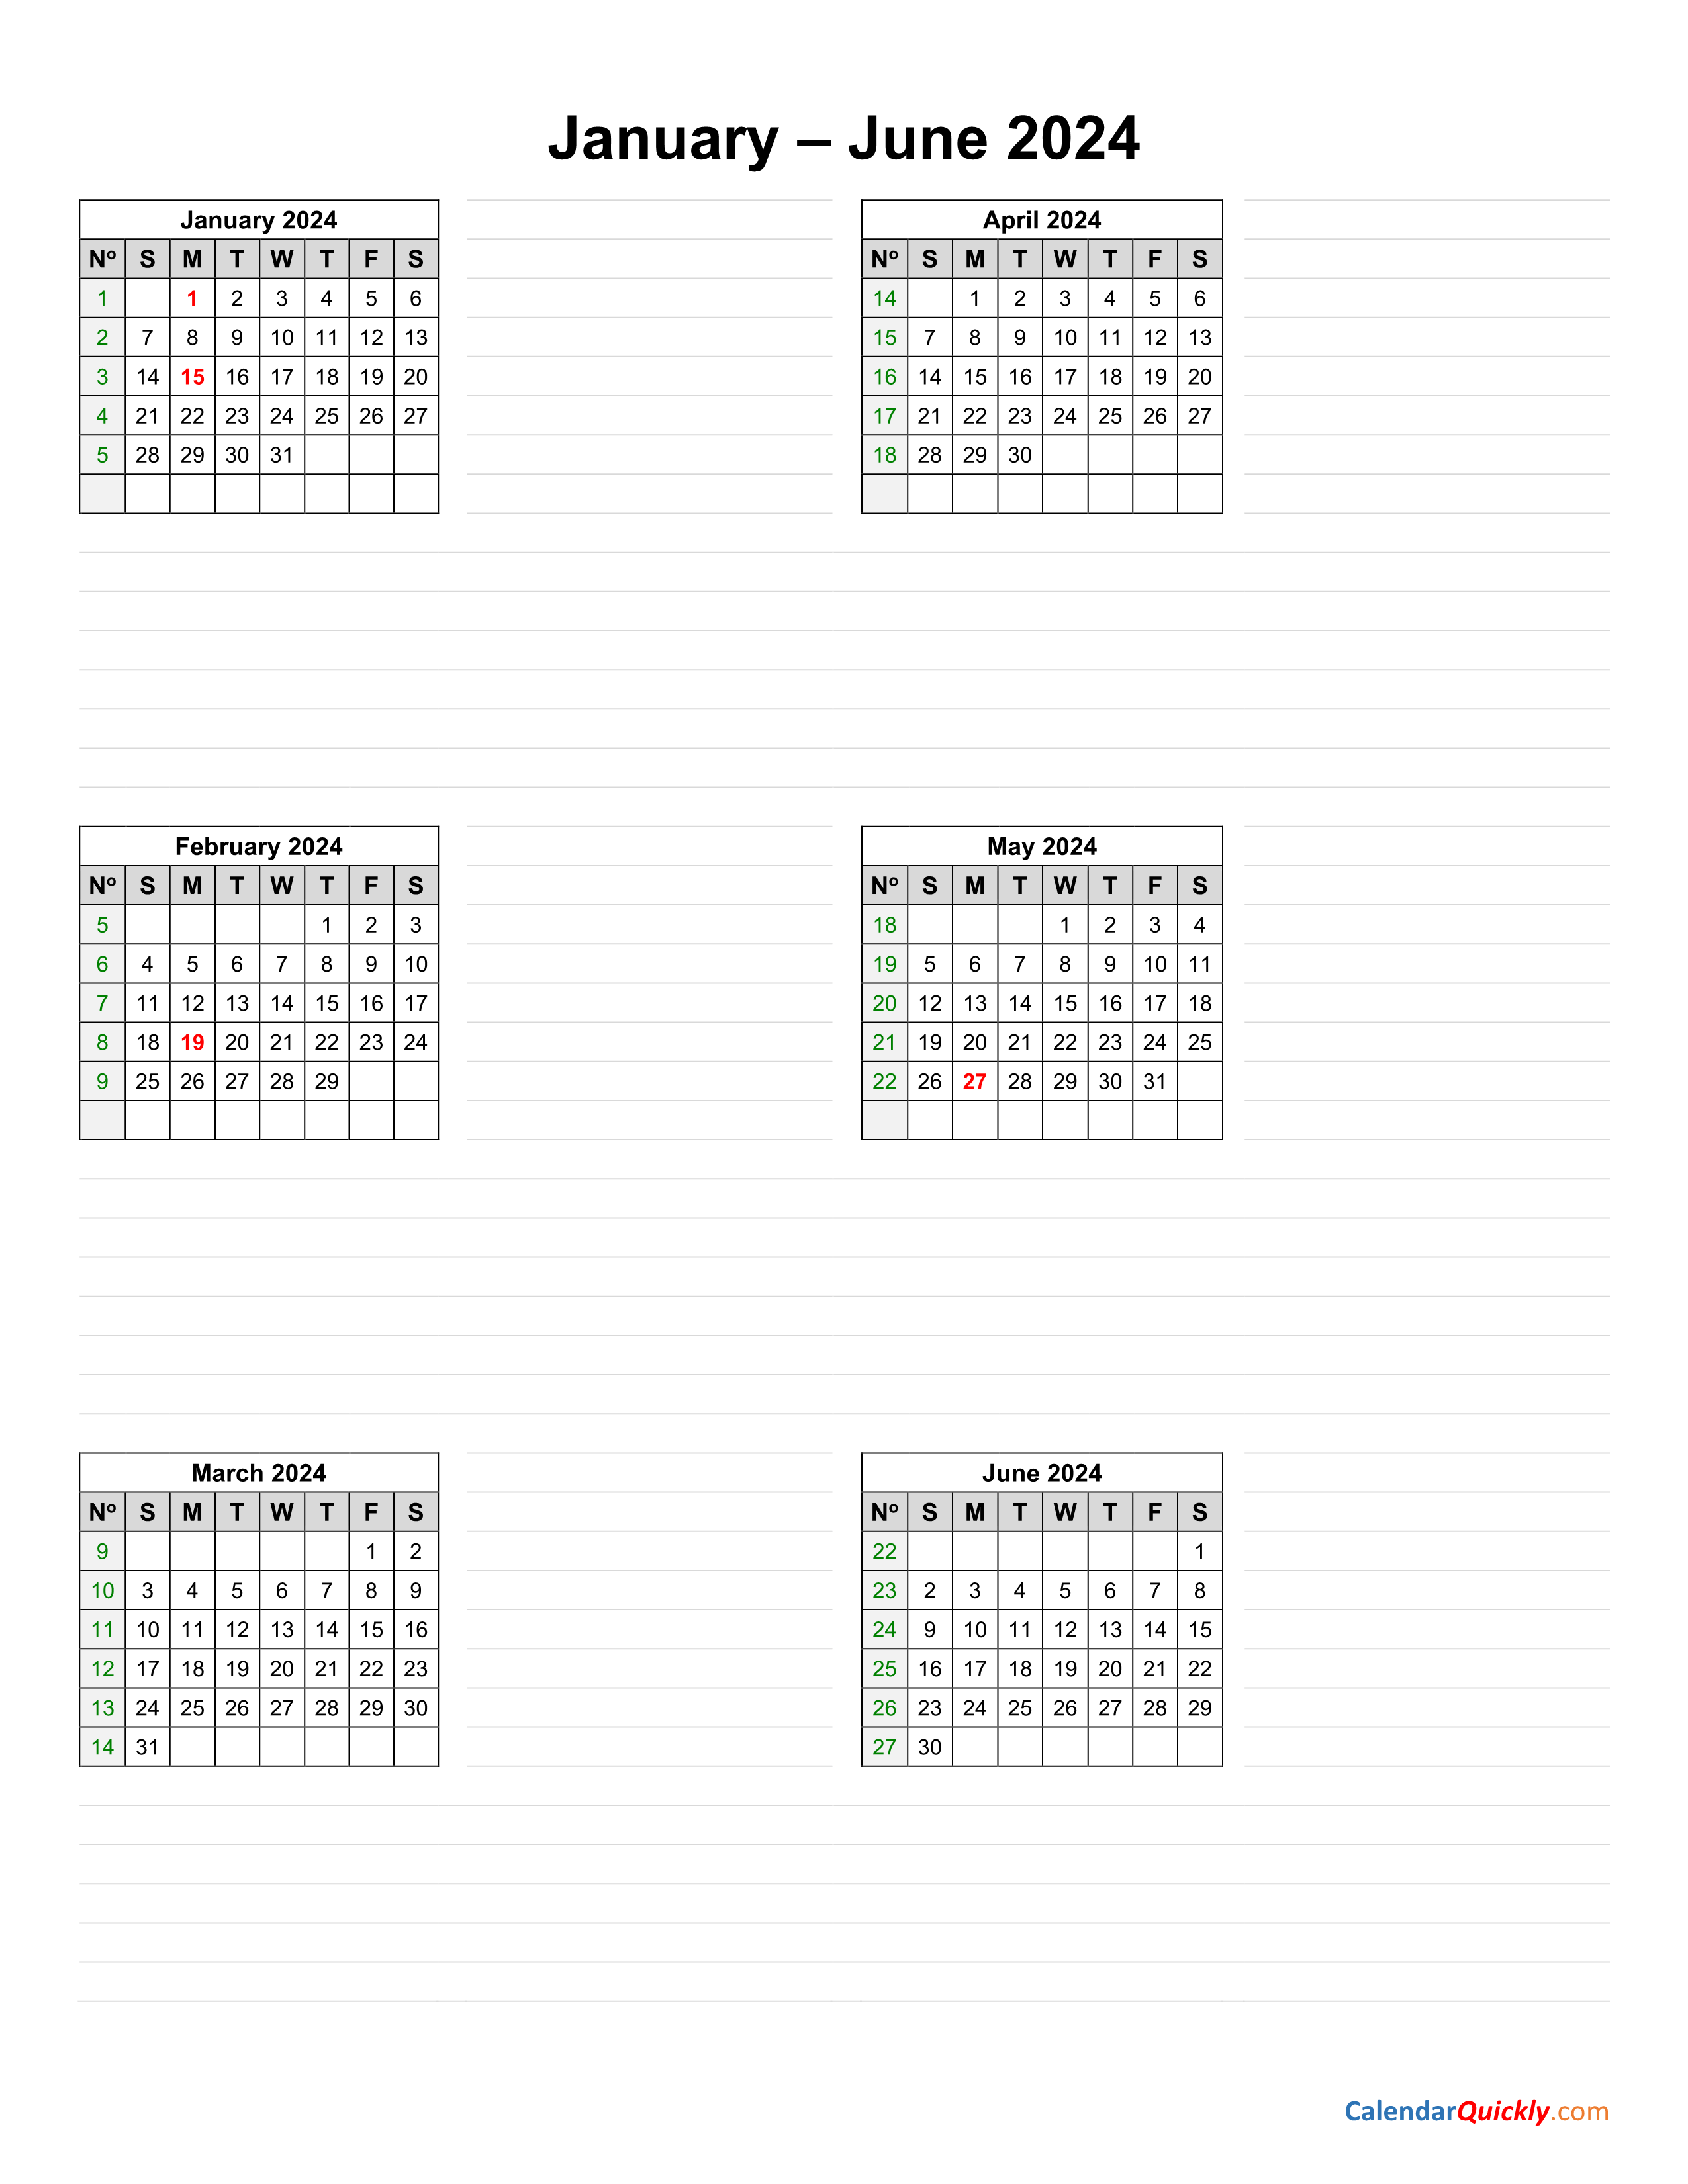 January to June 2024 Calendar Vertical | Calendar Quickly